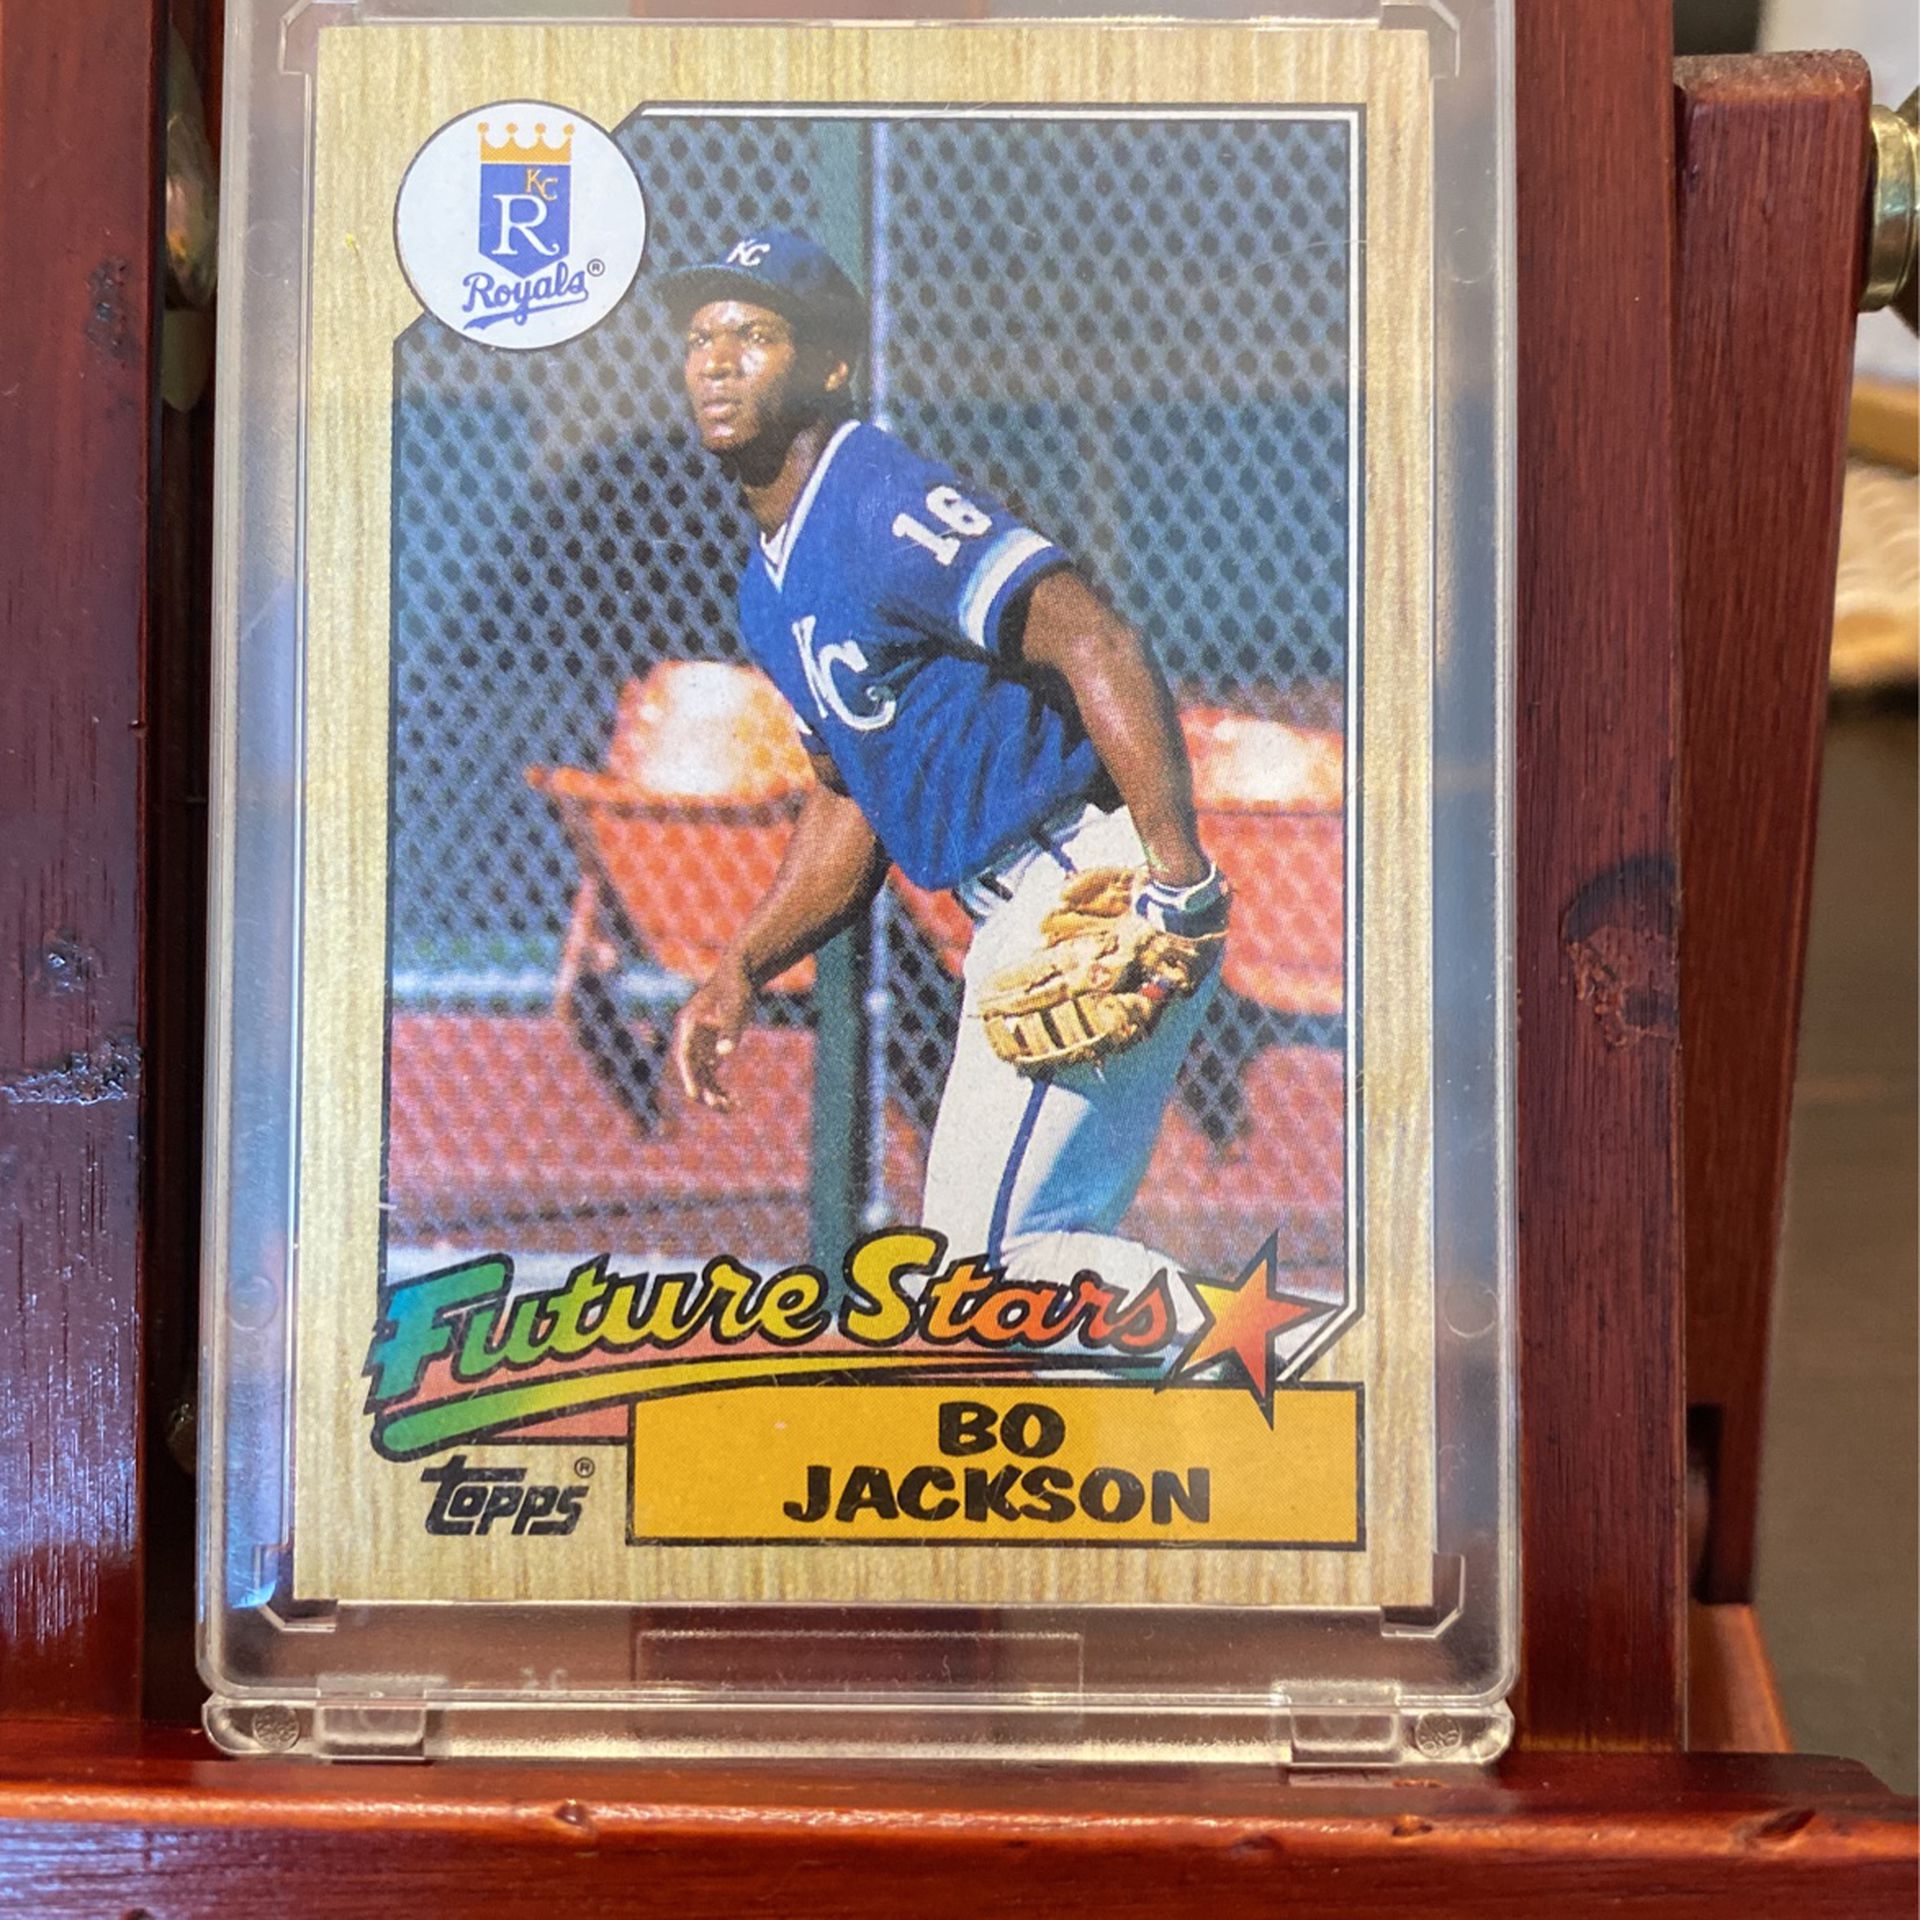 Future Stars Bo Jackson Base ball Card